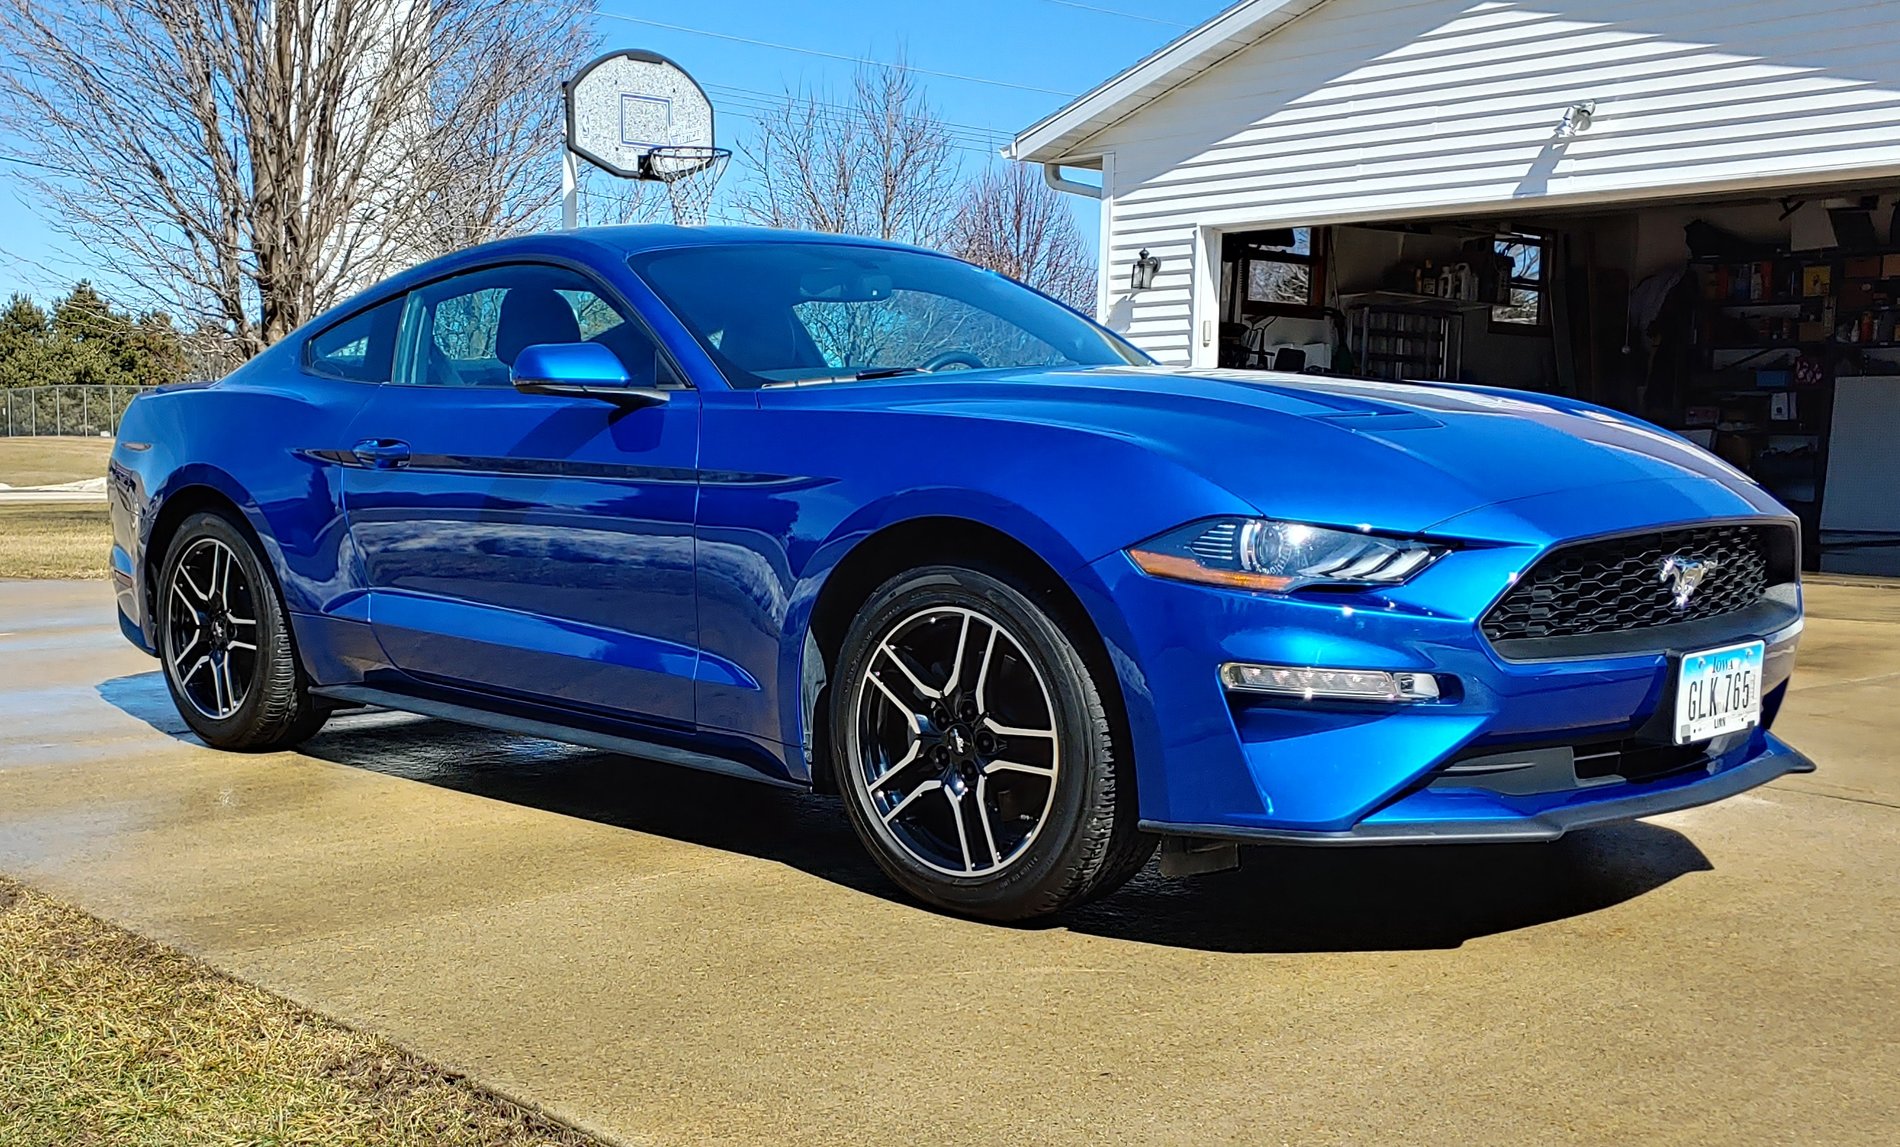 2018 Mustang - Stock Rims2.jpg